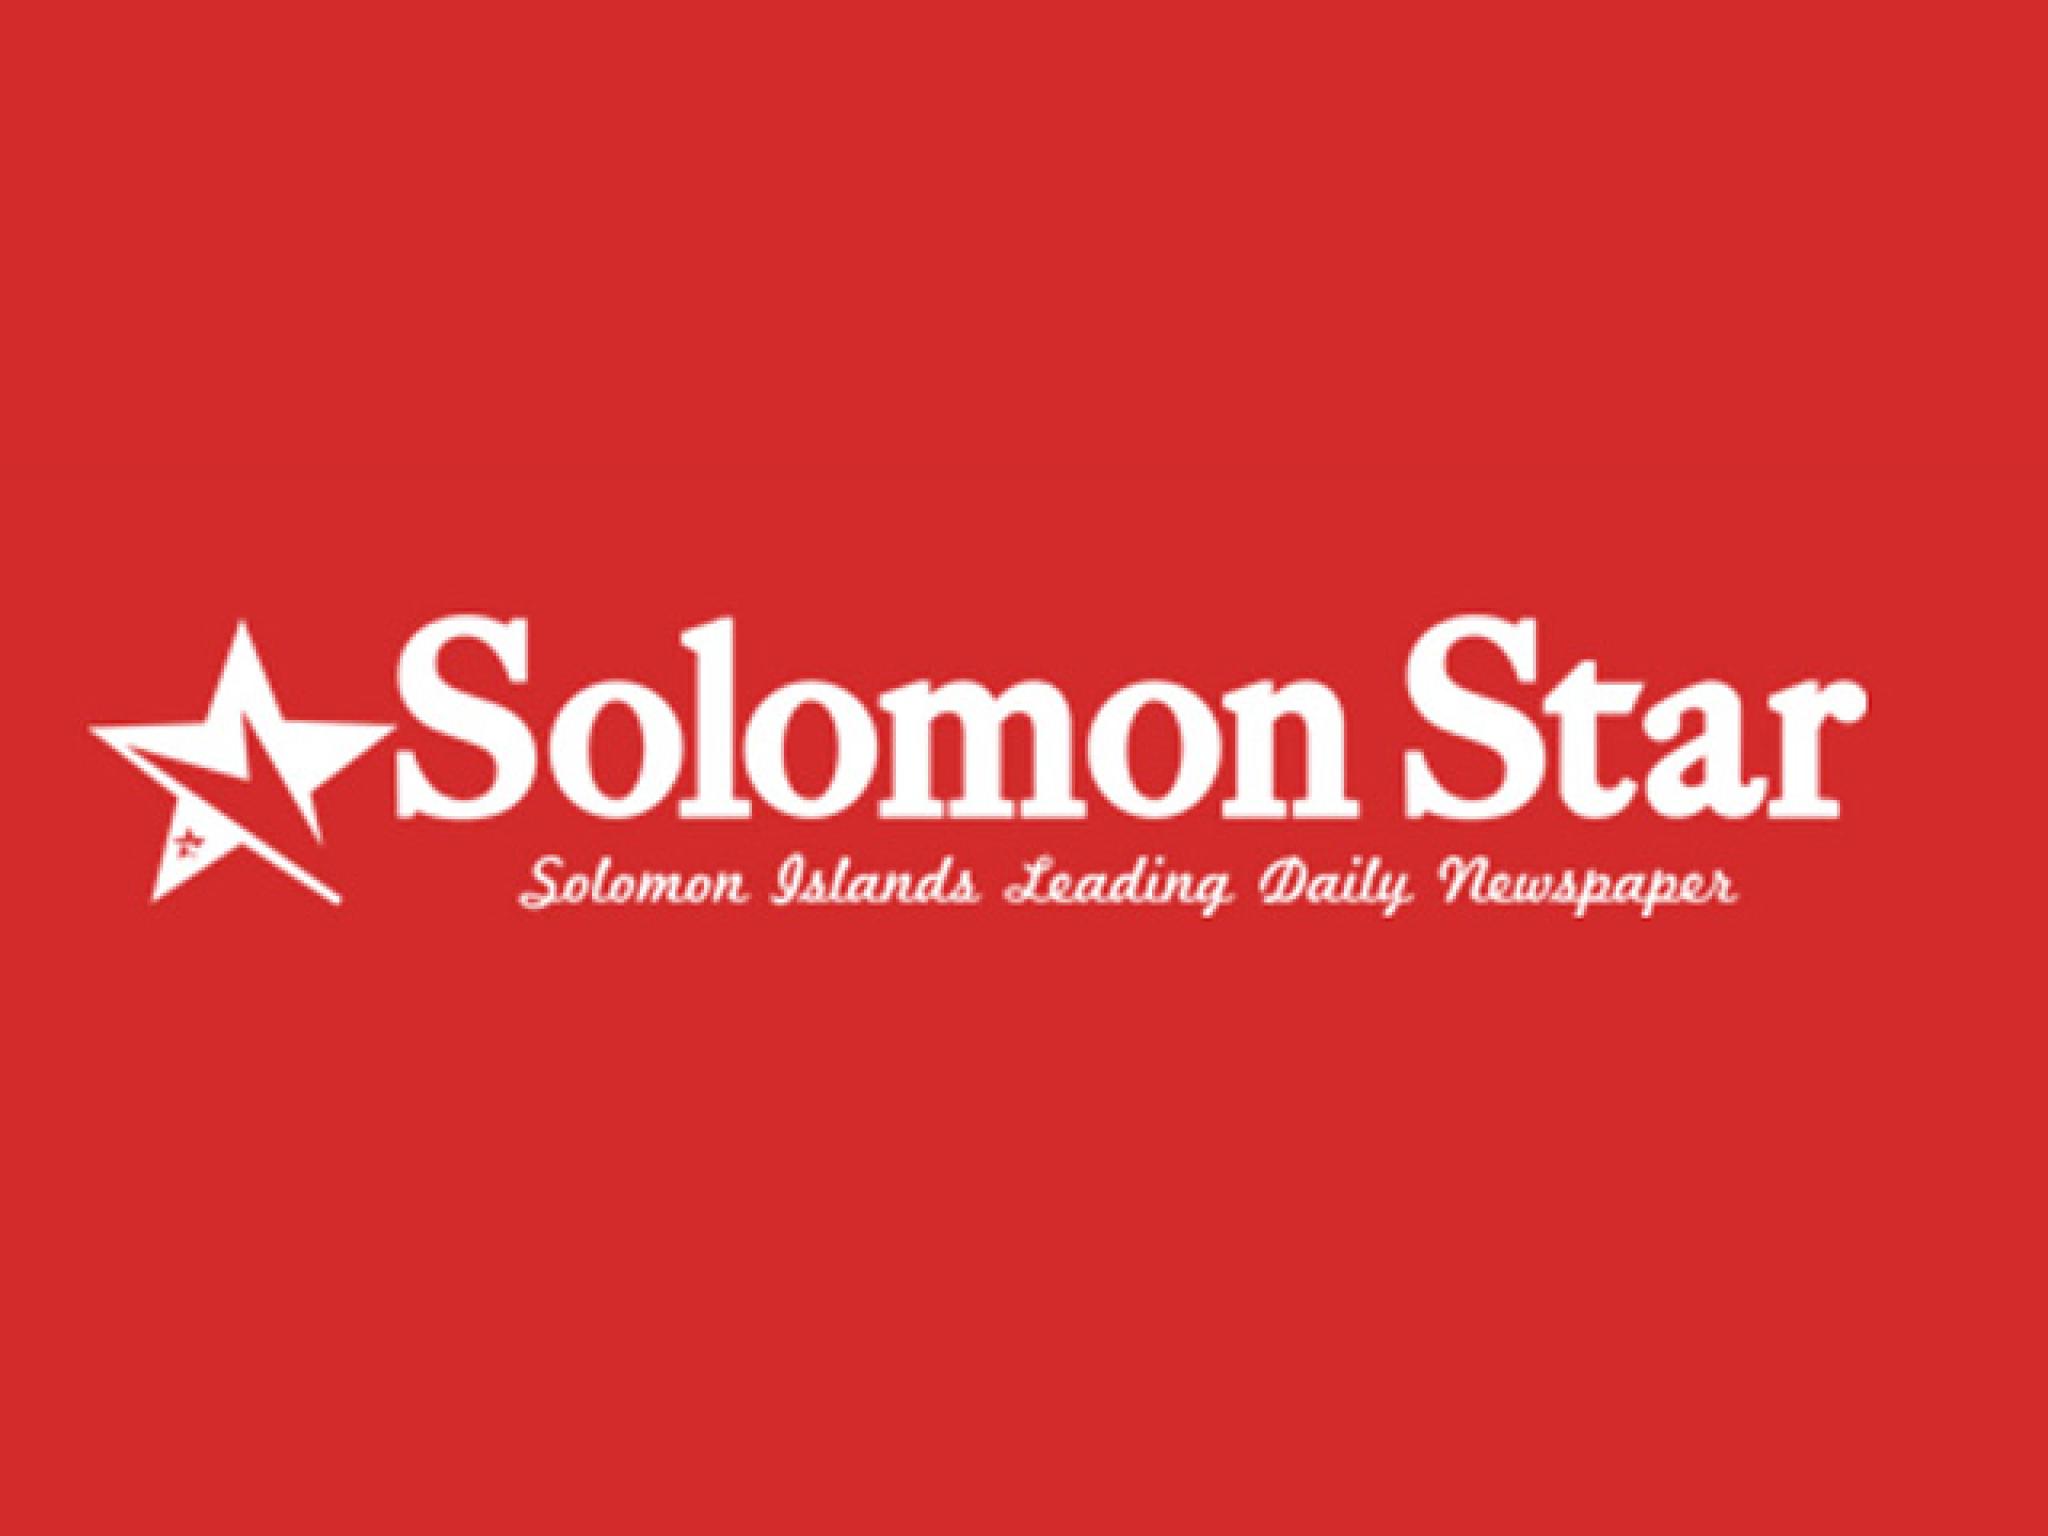 Solomon Star